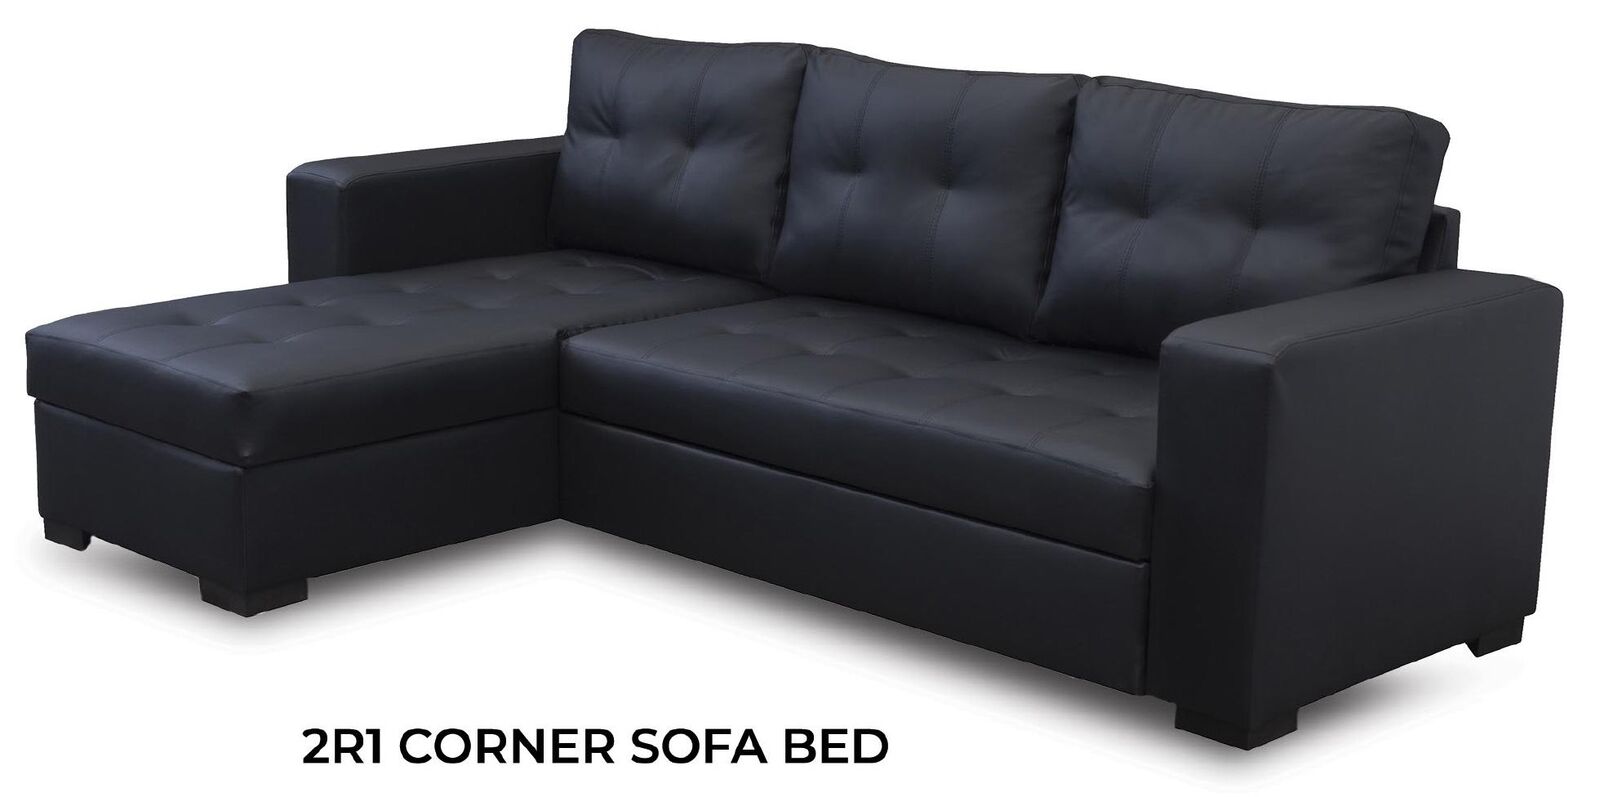 L-Form Ecksofa Luxusmöbel Bequemes Sofa Design Moderne Eckcouch Möbel